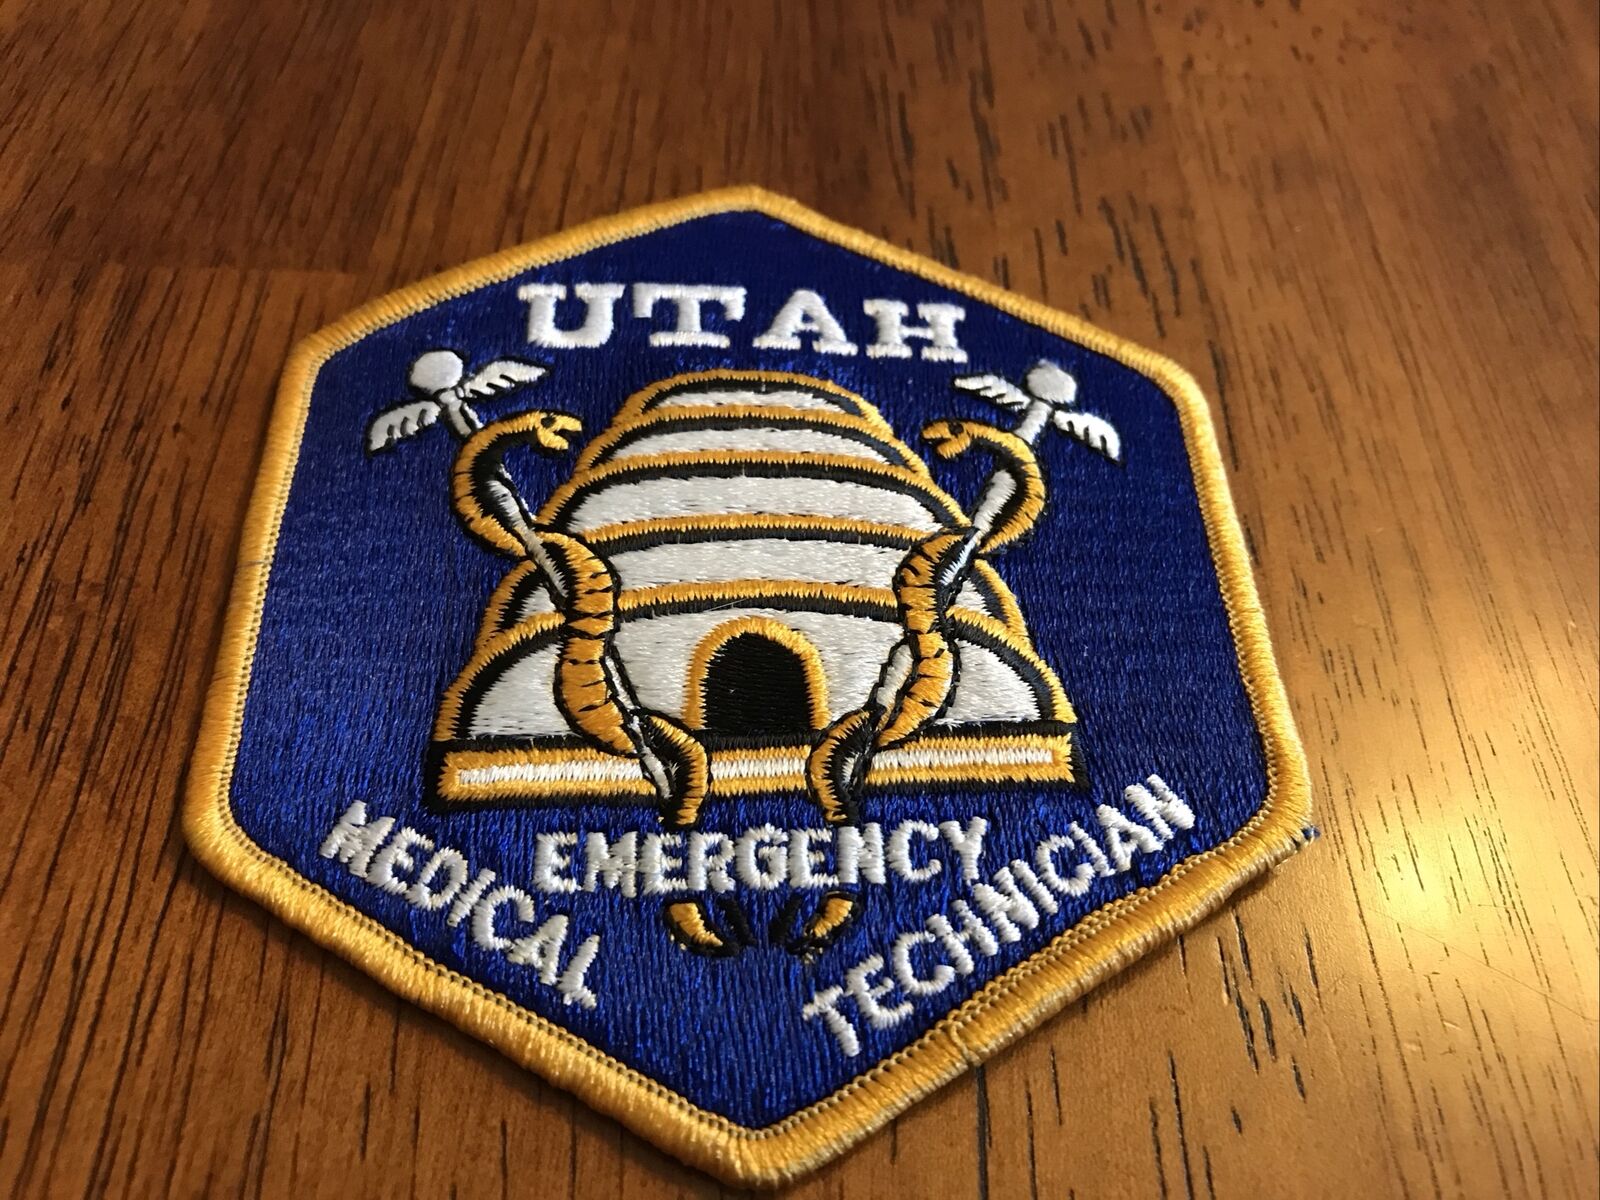 State of Utah UT Emergency Medical Technician EMT *GOLD BORDER* Badge patch New